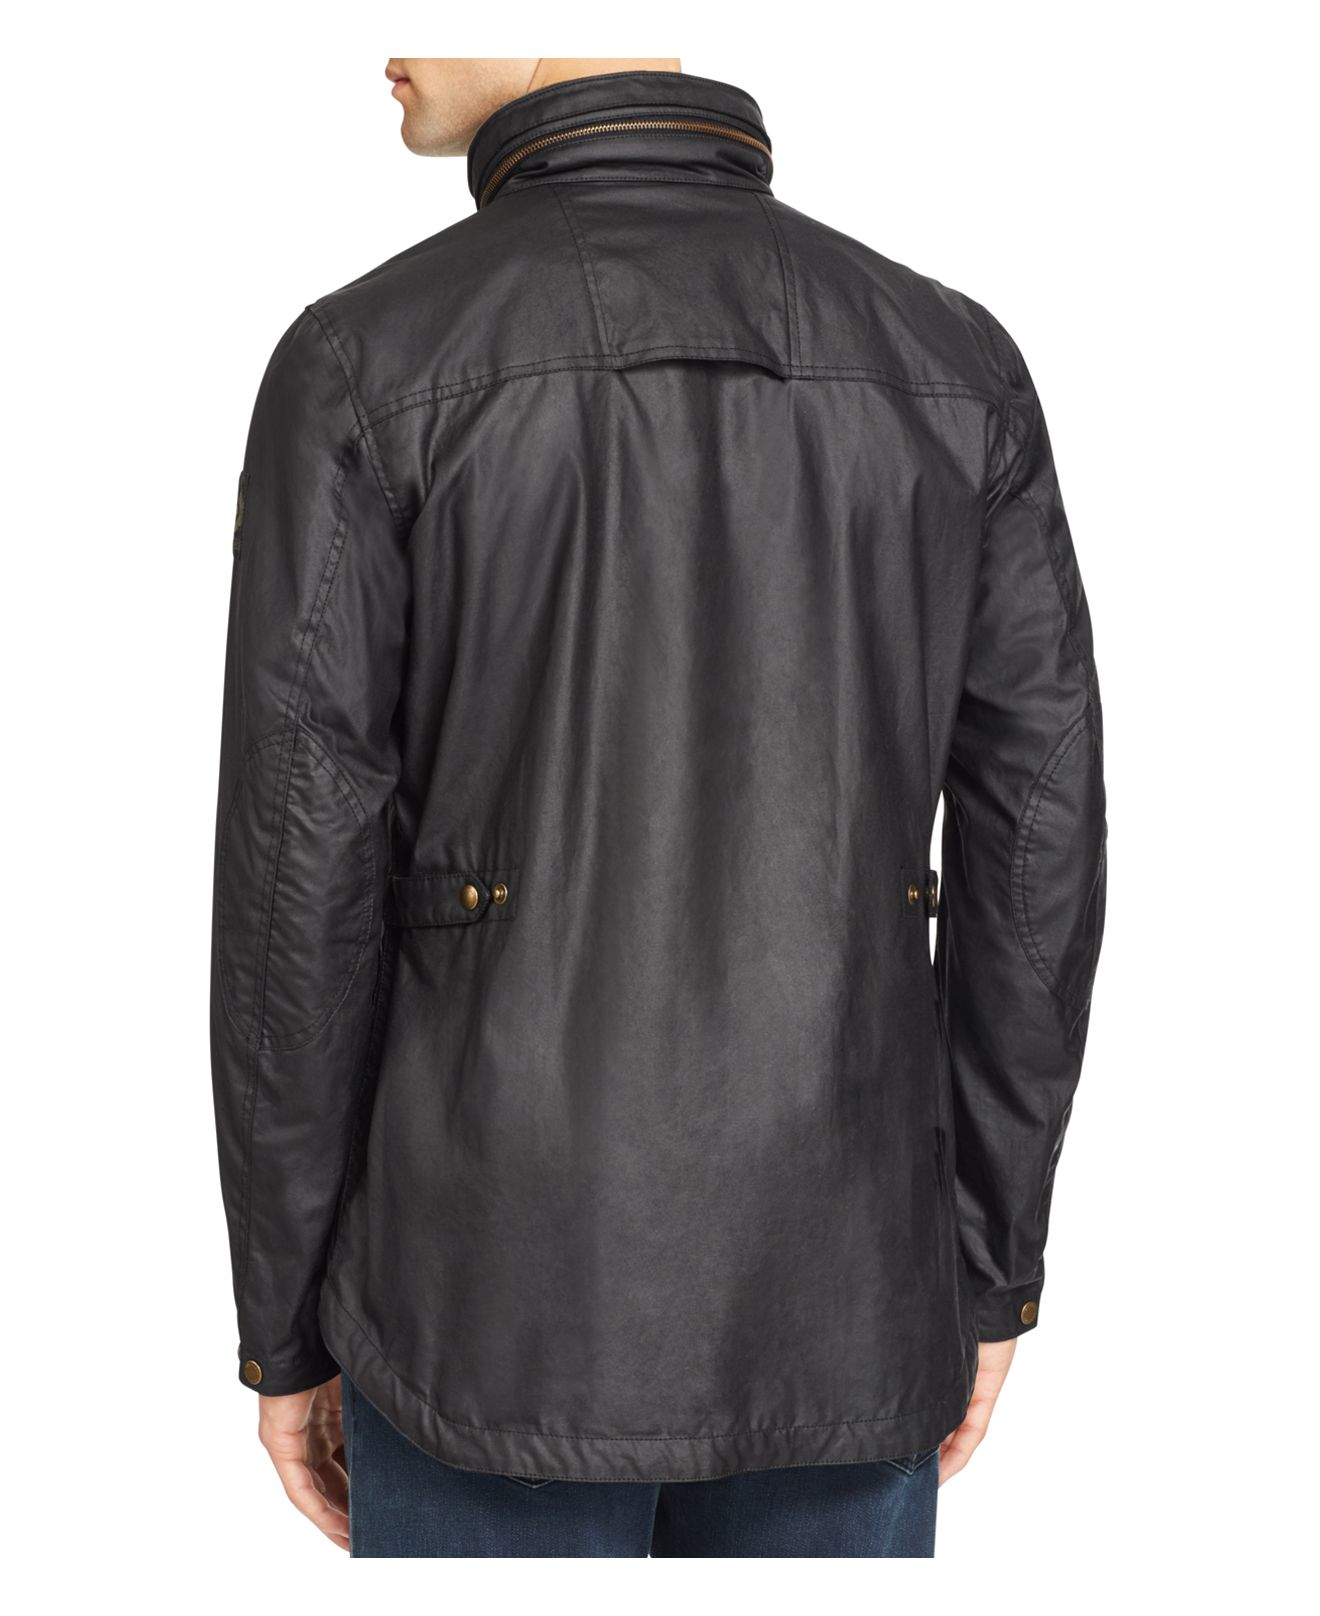 Lyst - Belstaff Citymaster Hooded Waxed Cotton Jacket in Black for Men